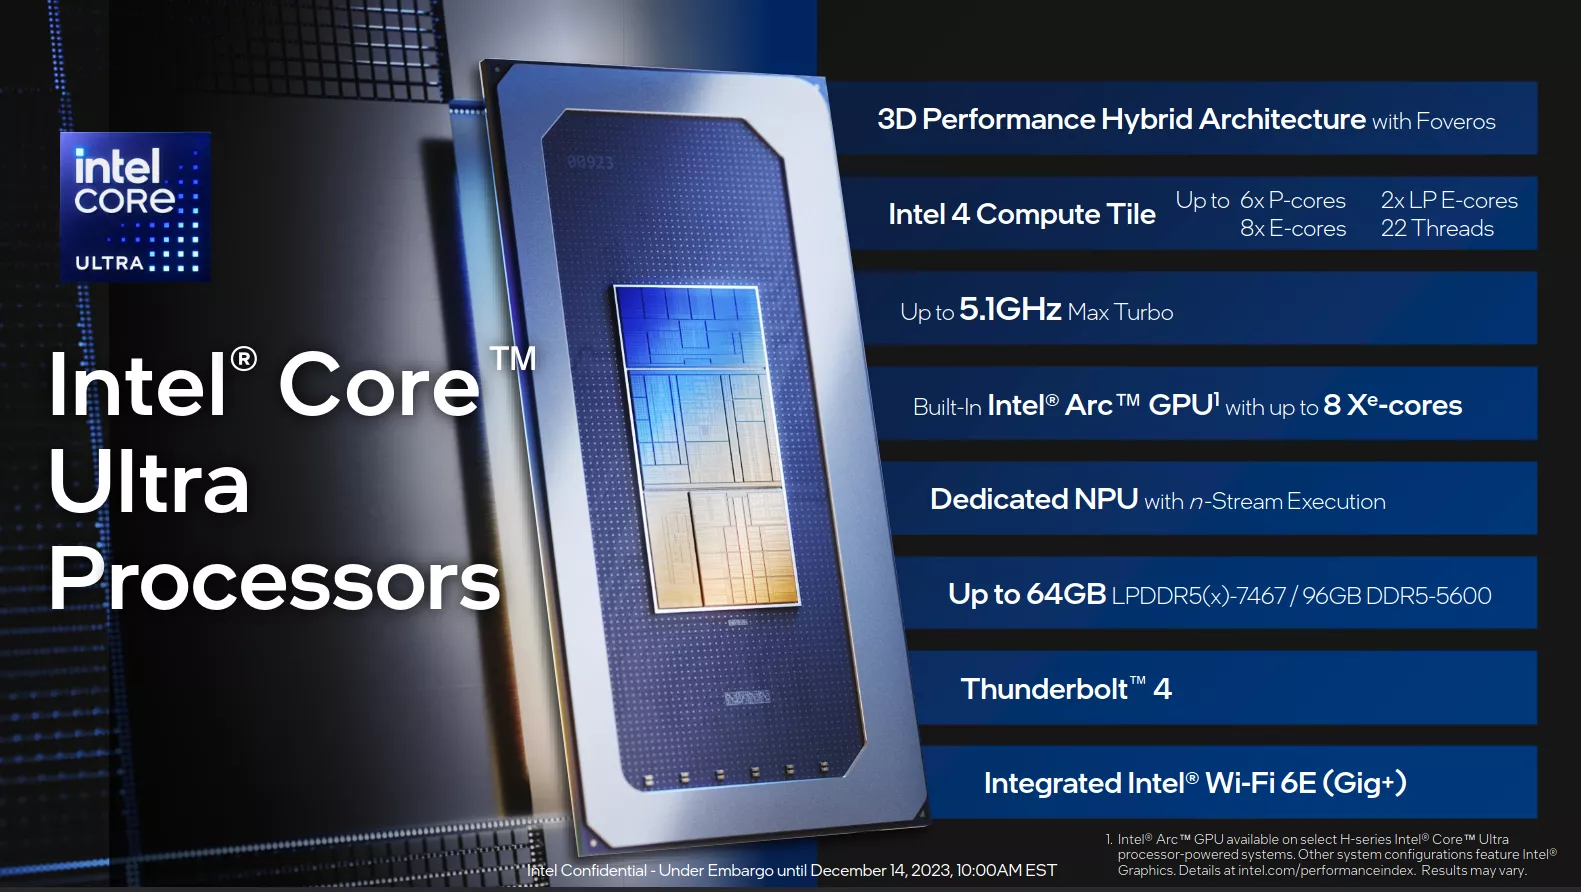 Intel Core Ultra Processors